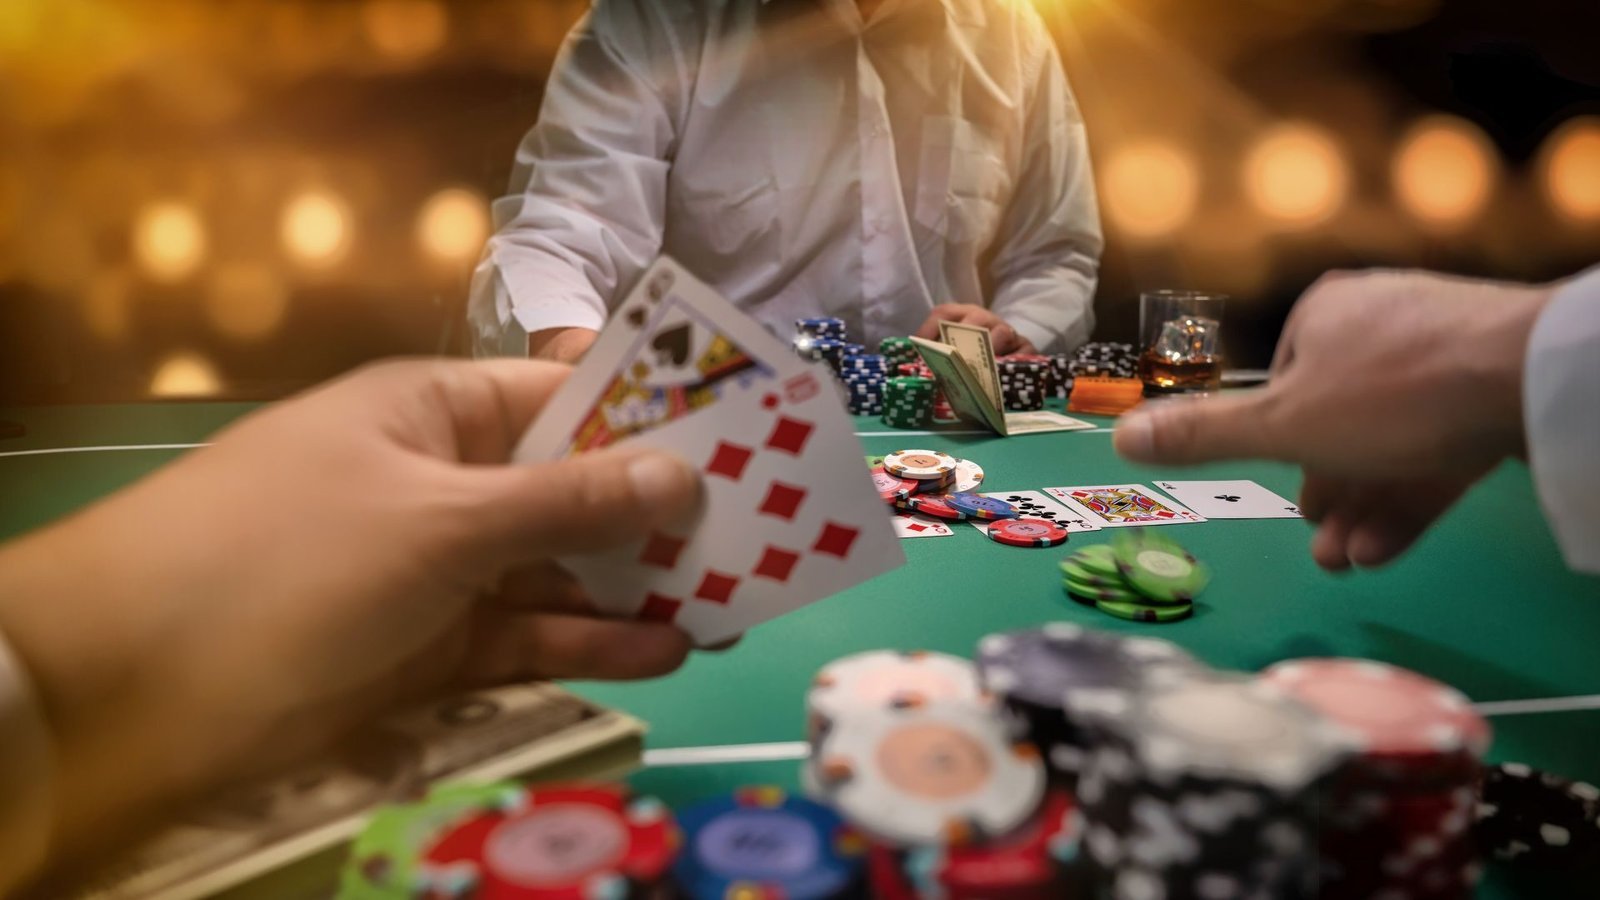 video-poker-games-play-video-poker-online-video-poker-video-poker-game-bonus-poker-video-poker-machines